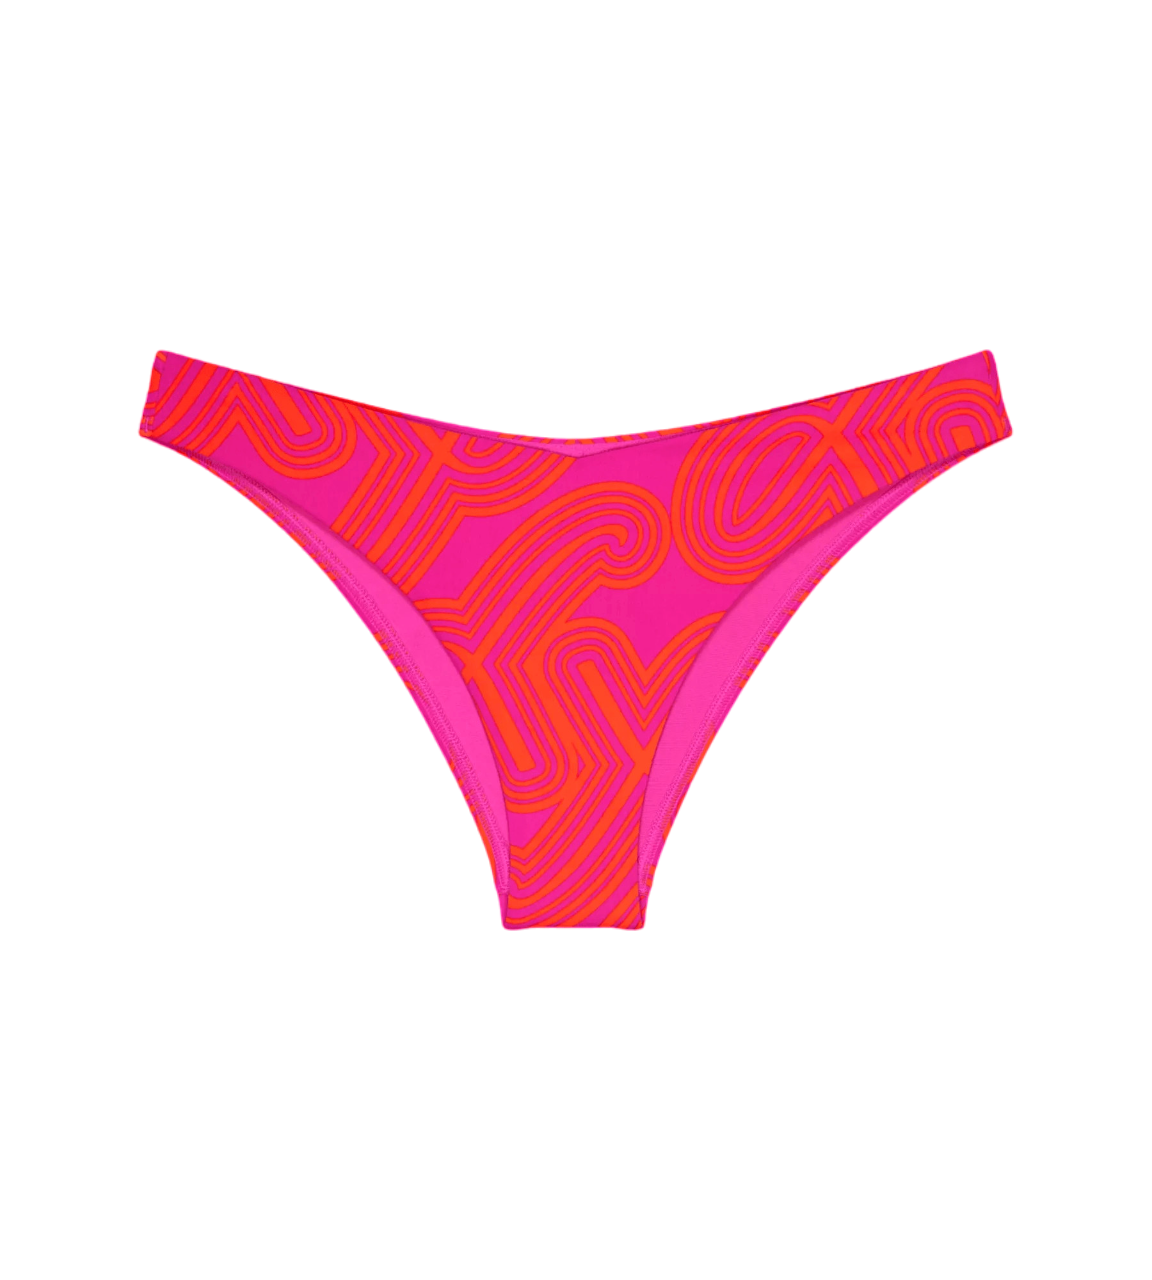 Dámské plavkové kalhotky Flex Smart Summer Rio pt EX - PINK - růžové M019 - TRIUMPH PINK M